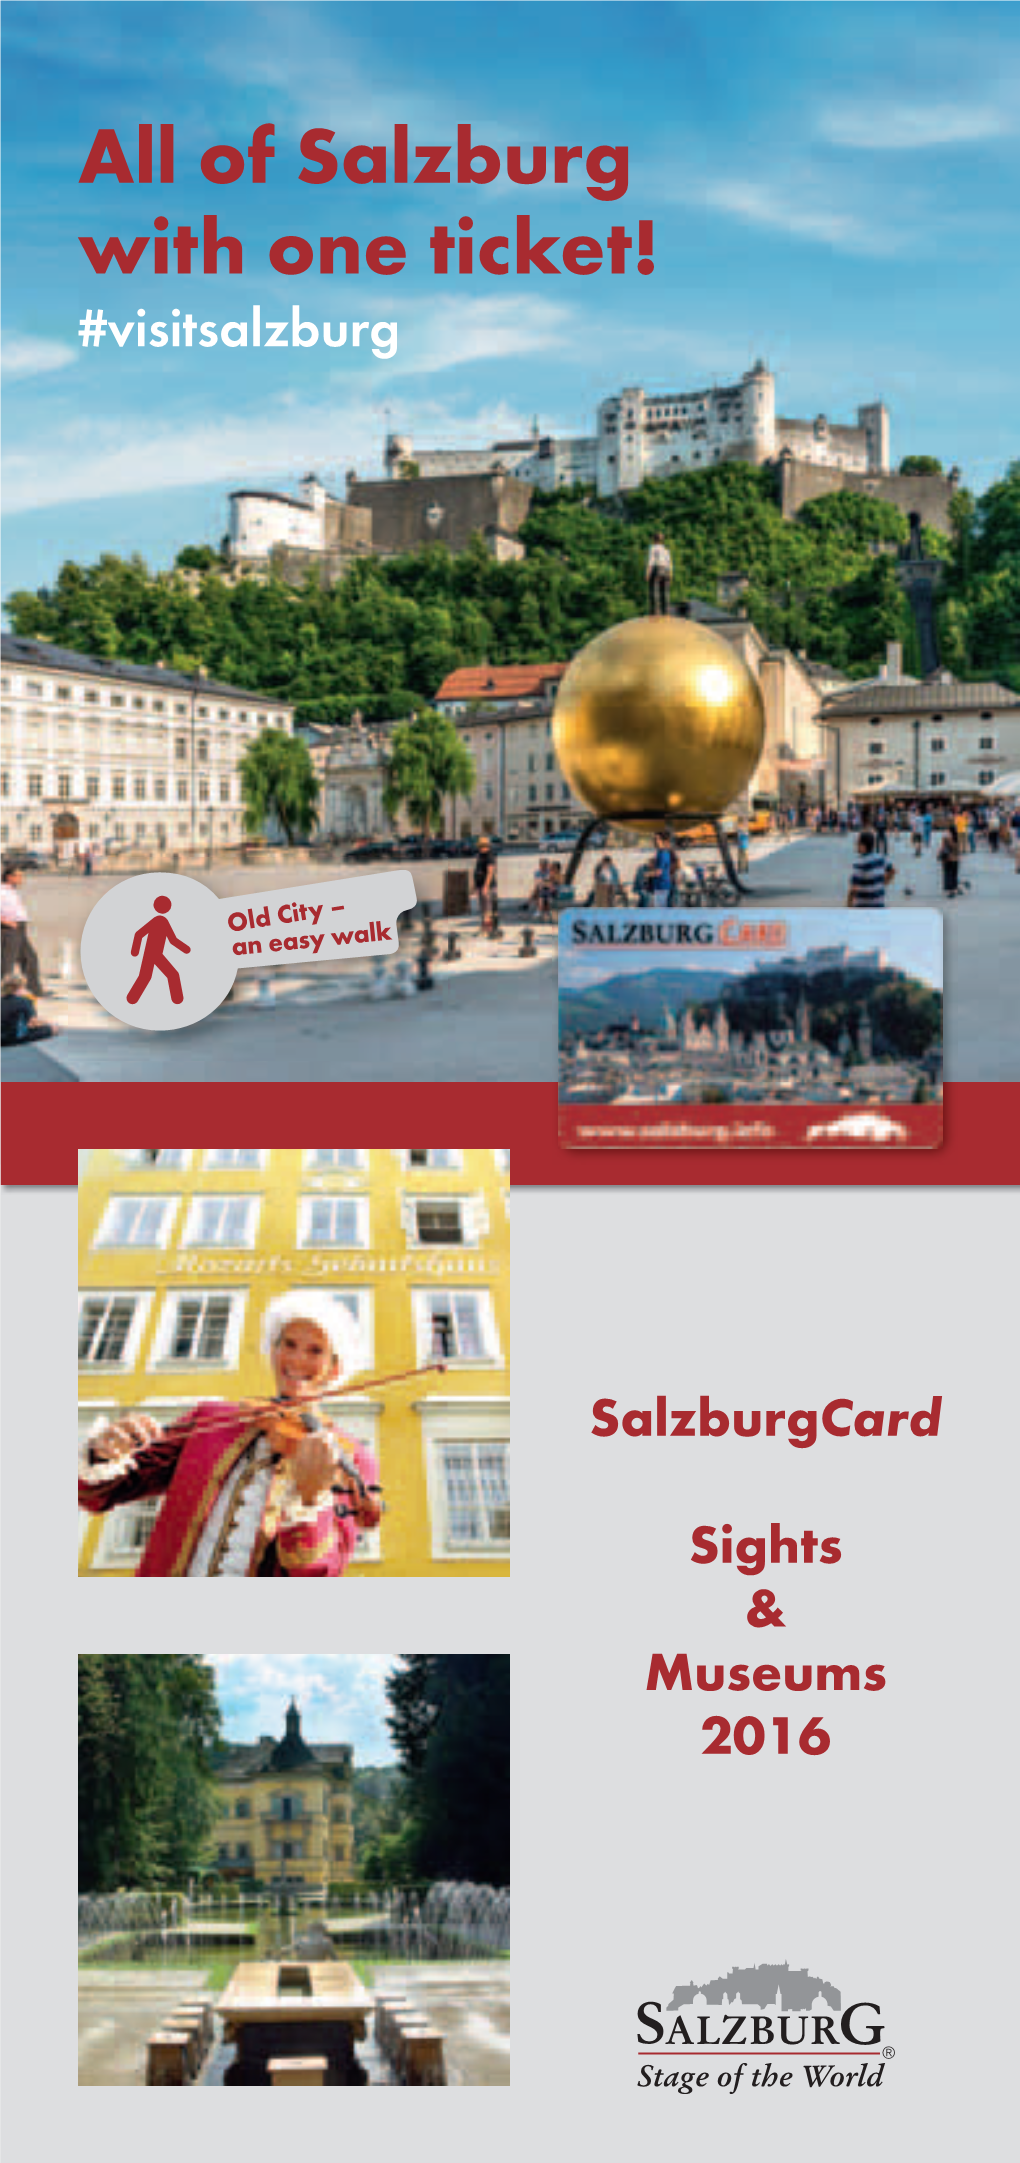 All of Salzburg with One Ticket! #Visitsalzburg